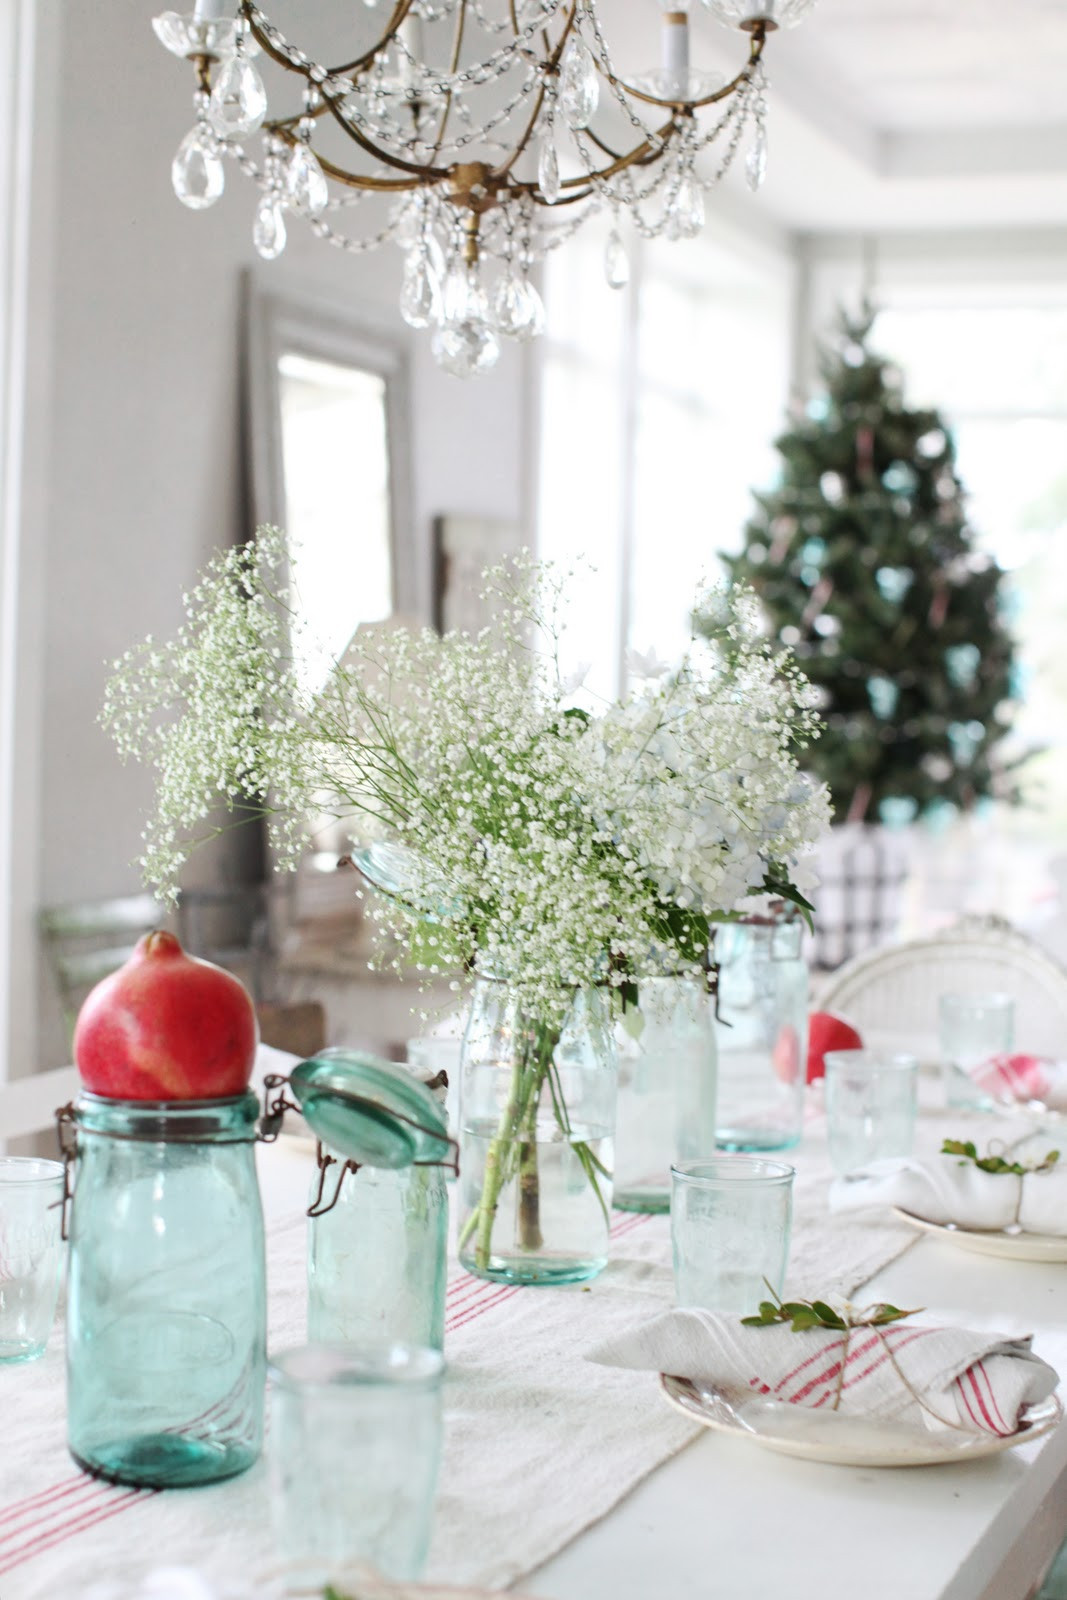 Elegant Christmas Table Settings Ideas
 Dreamy Whites A Simple Christmas Table Setting